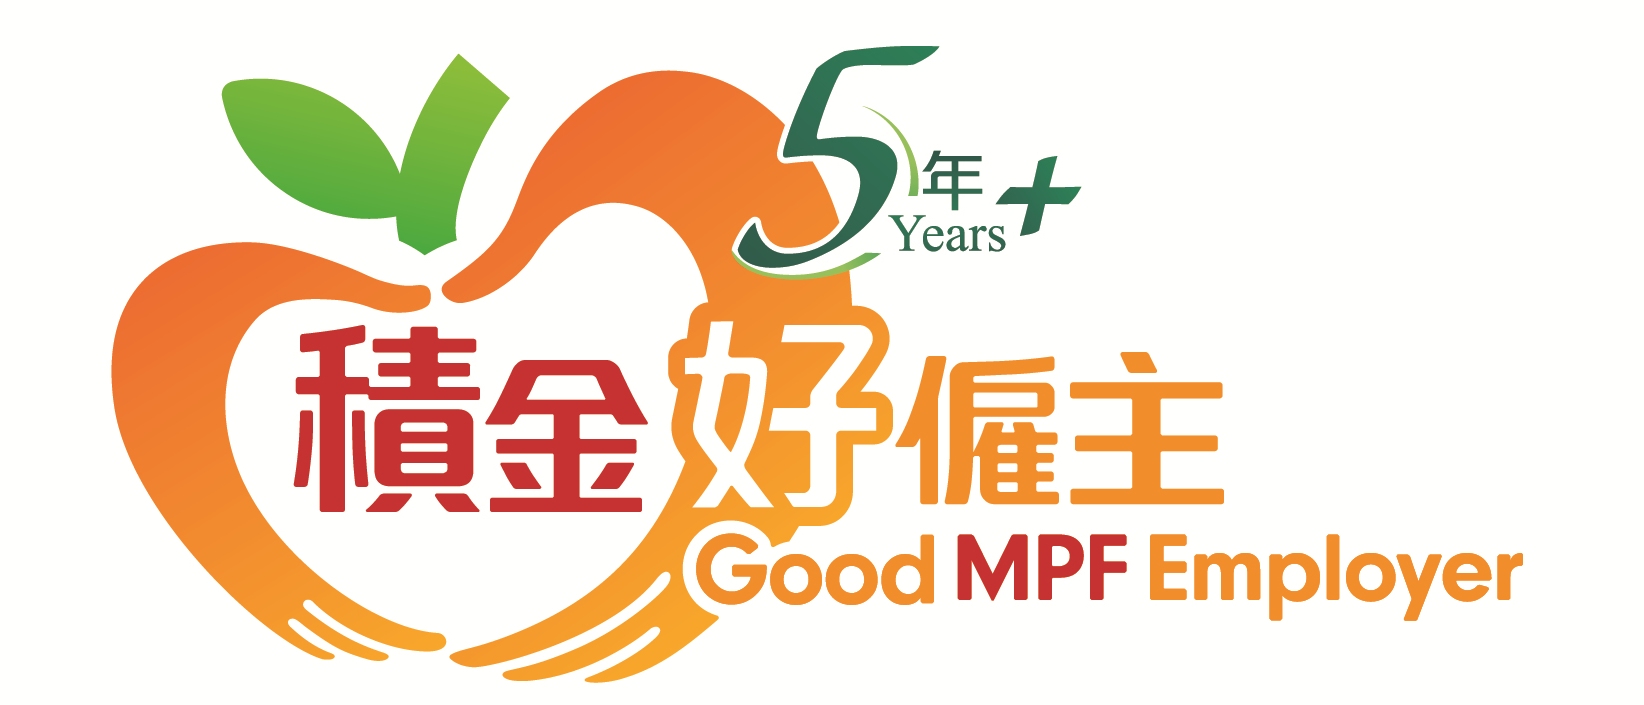 Good MPF Employer 2014-2022